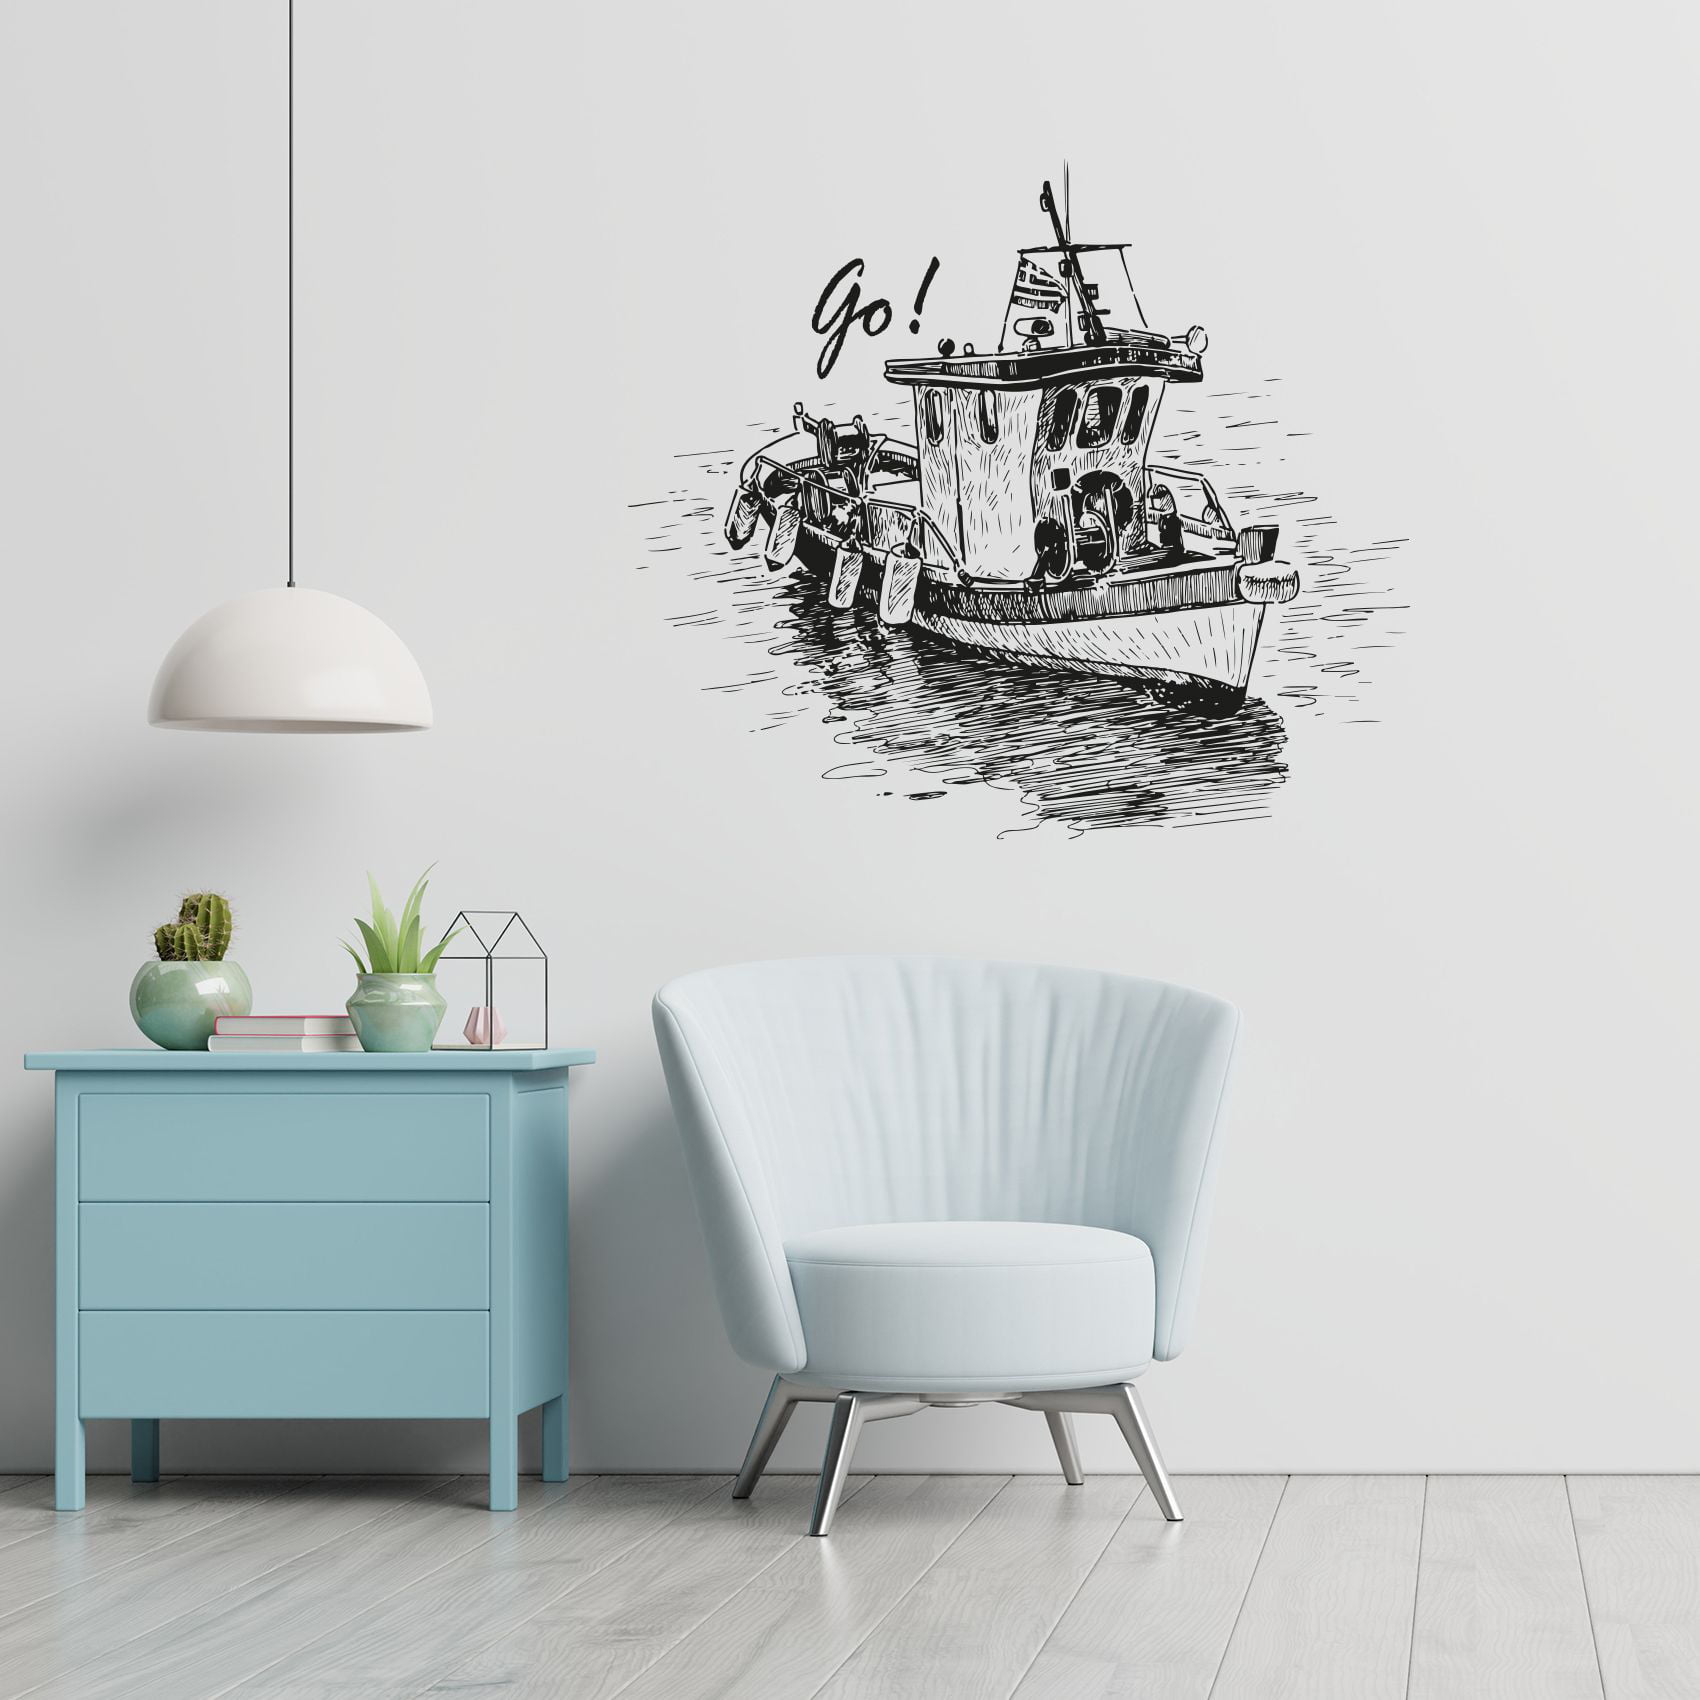 Ship Wheel Sailing Ocean Sail Boat Wall Art Decal Sticker Room House Decor v1 